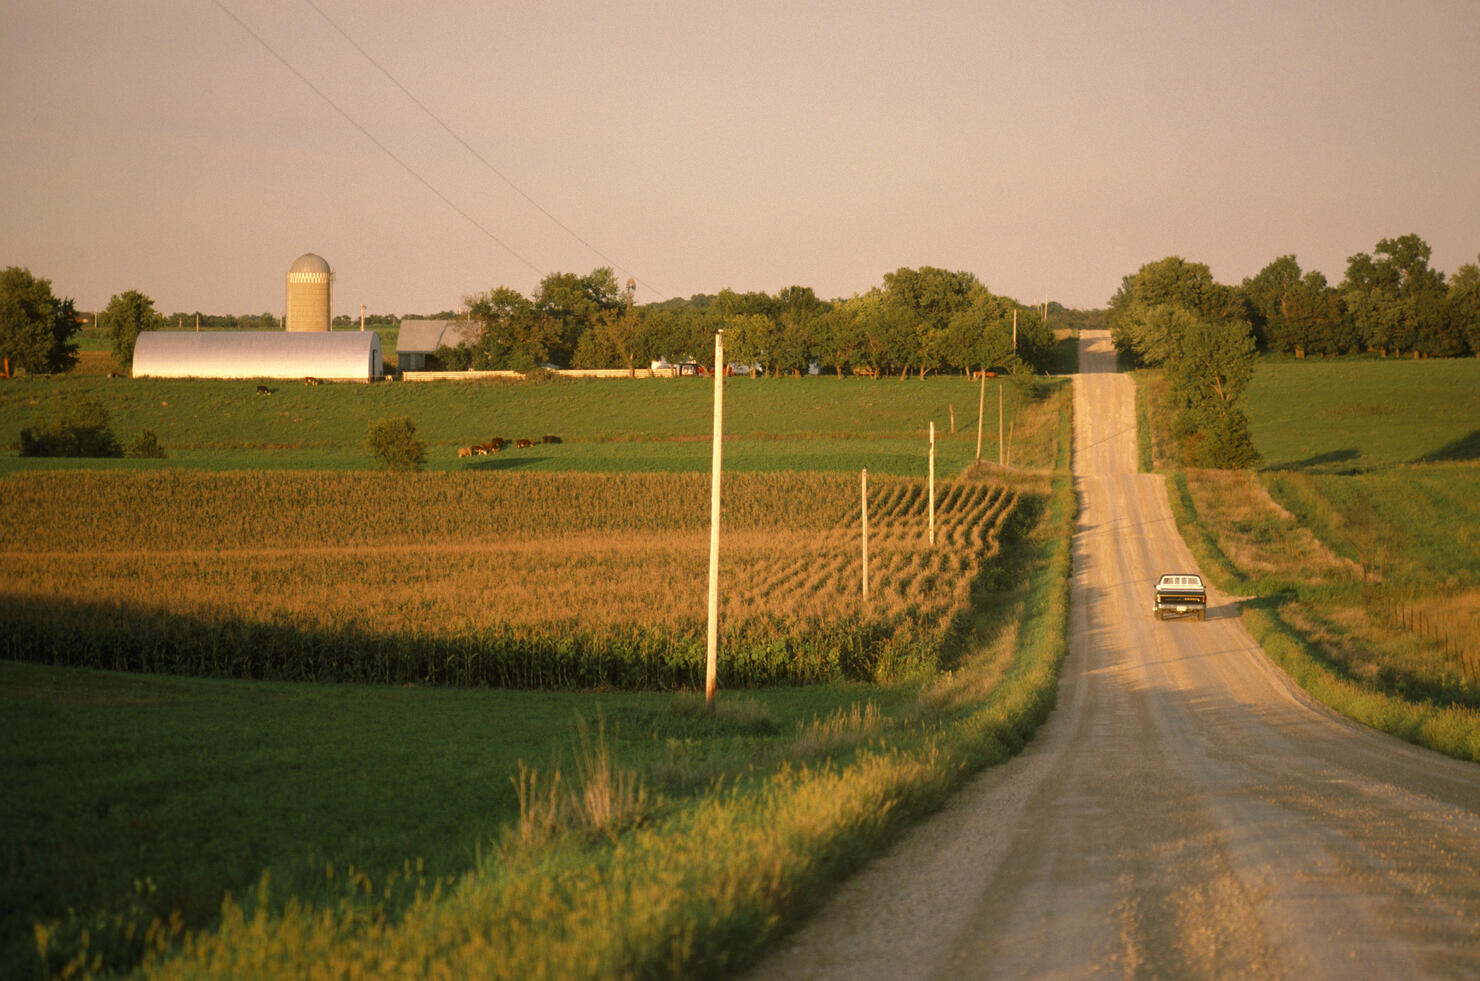 USA, northern Minnesota, truck on gravel road, rear view